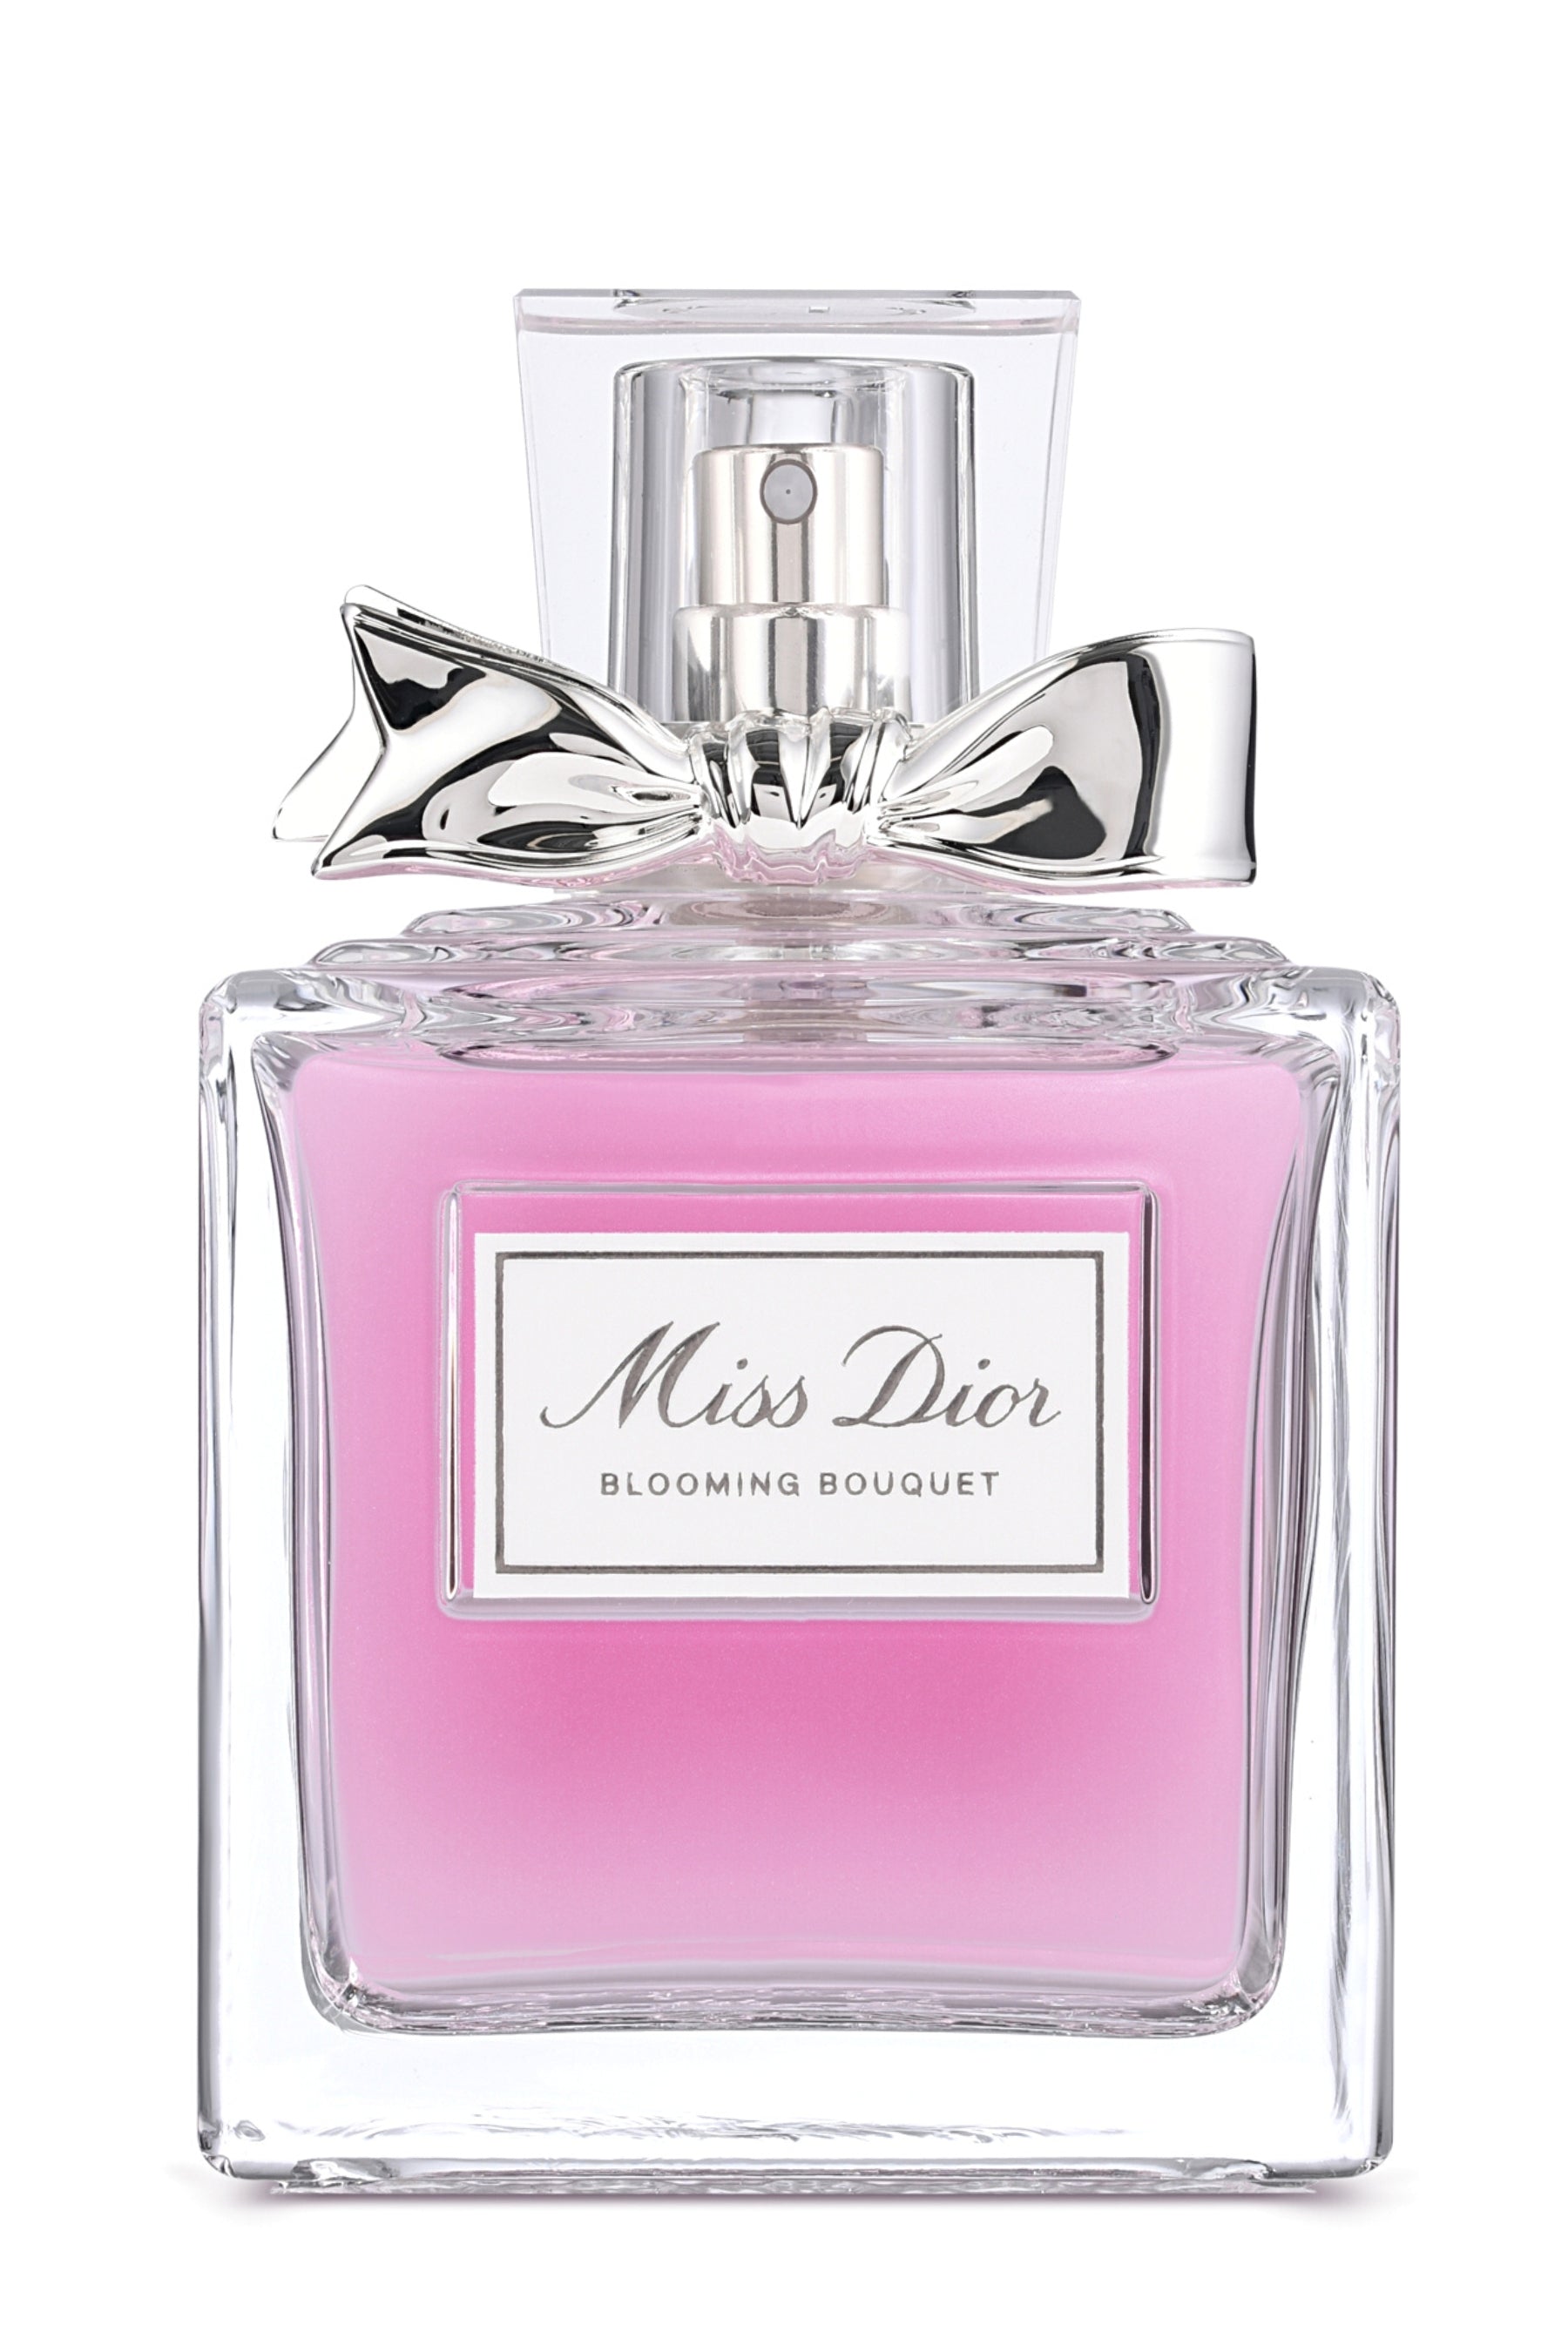 Miss Dior (cherie) Eau de Toilette Spray 3.4 oz by Christian Dior